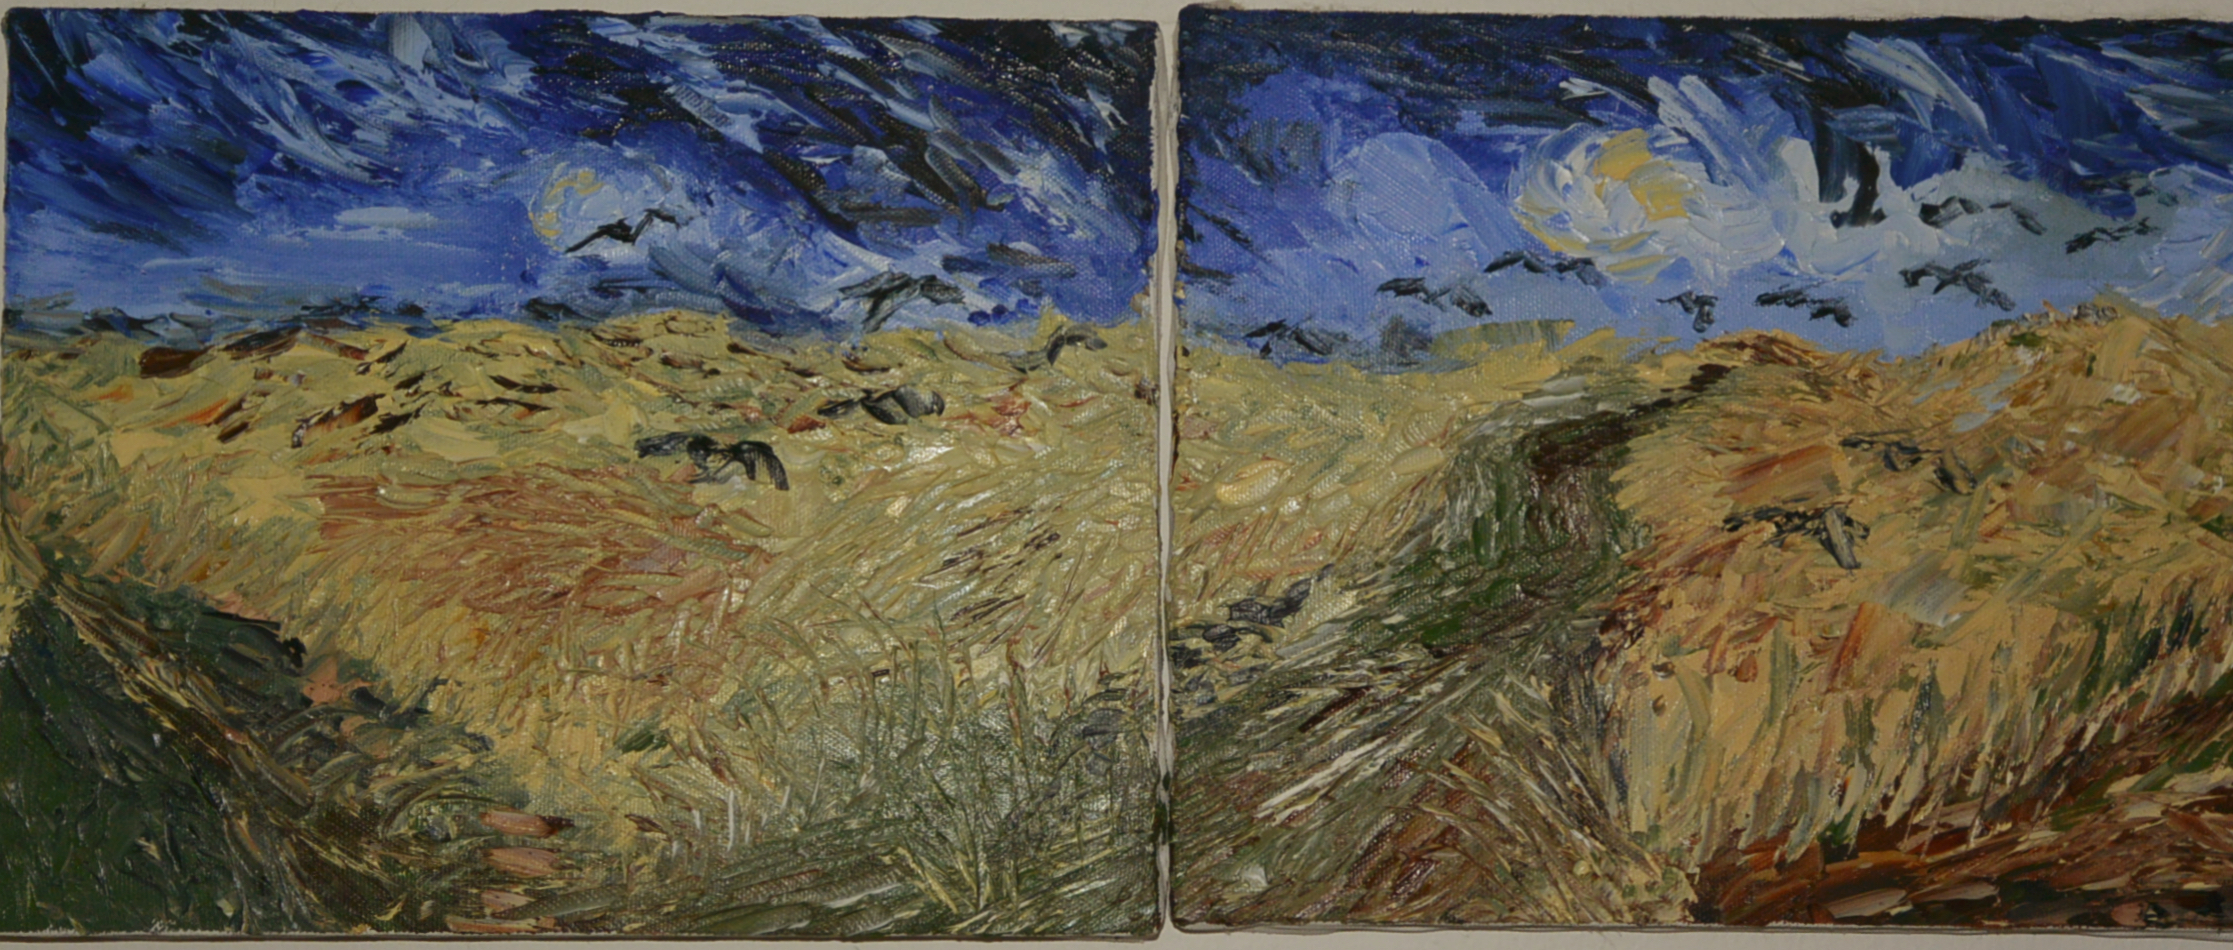 Study about Van Gogh